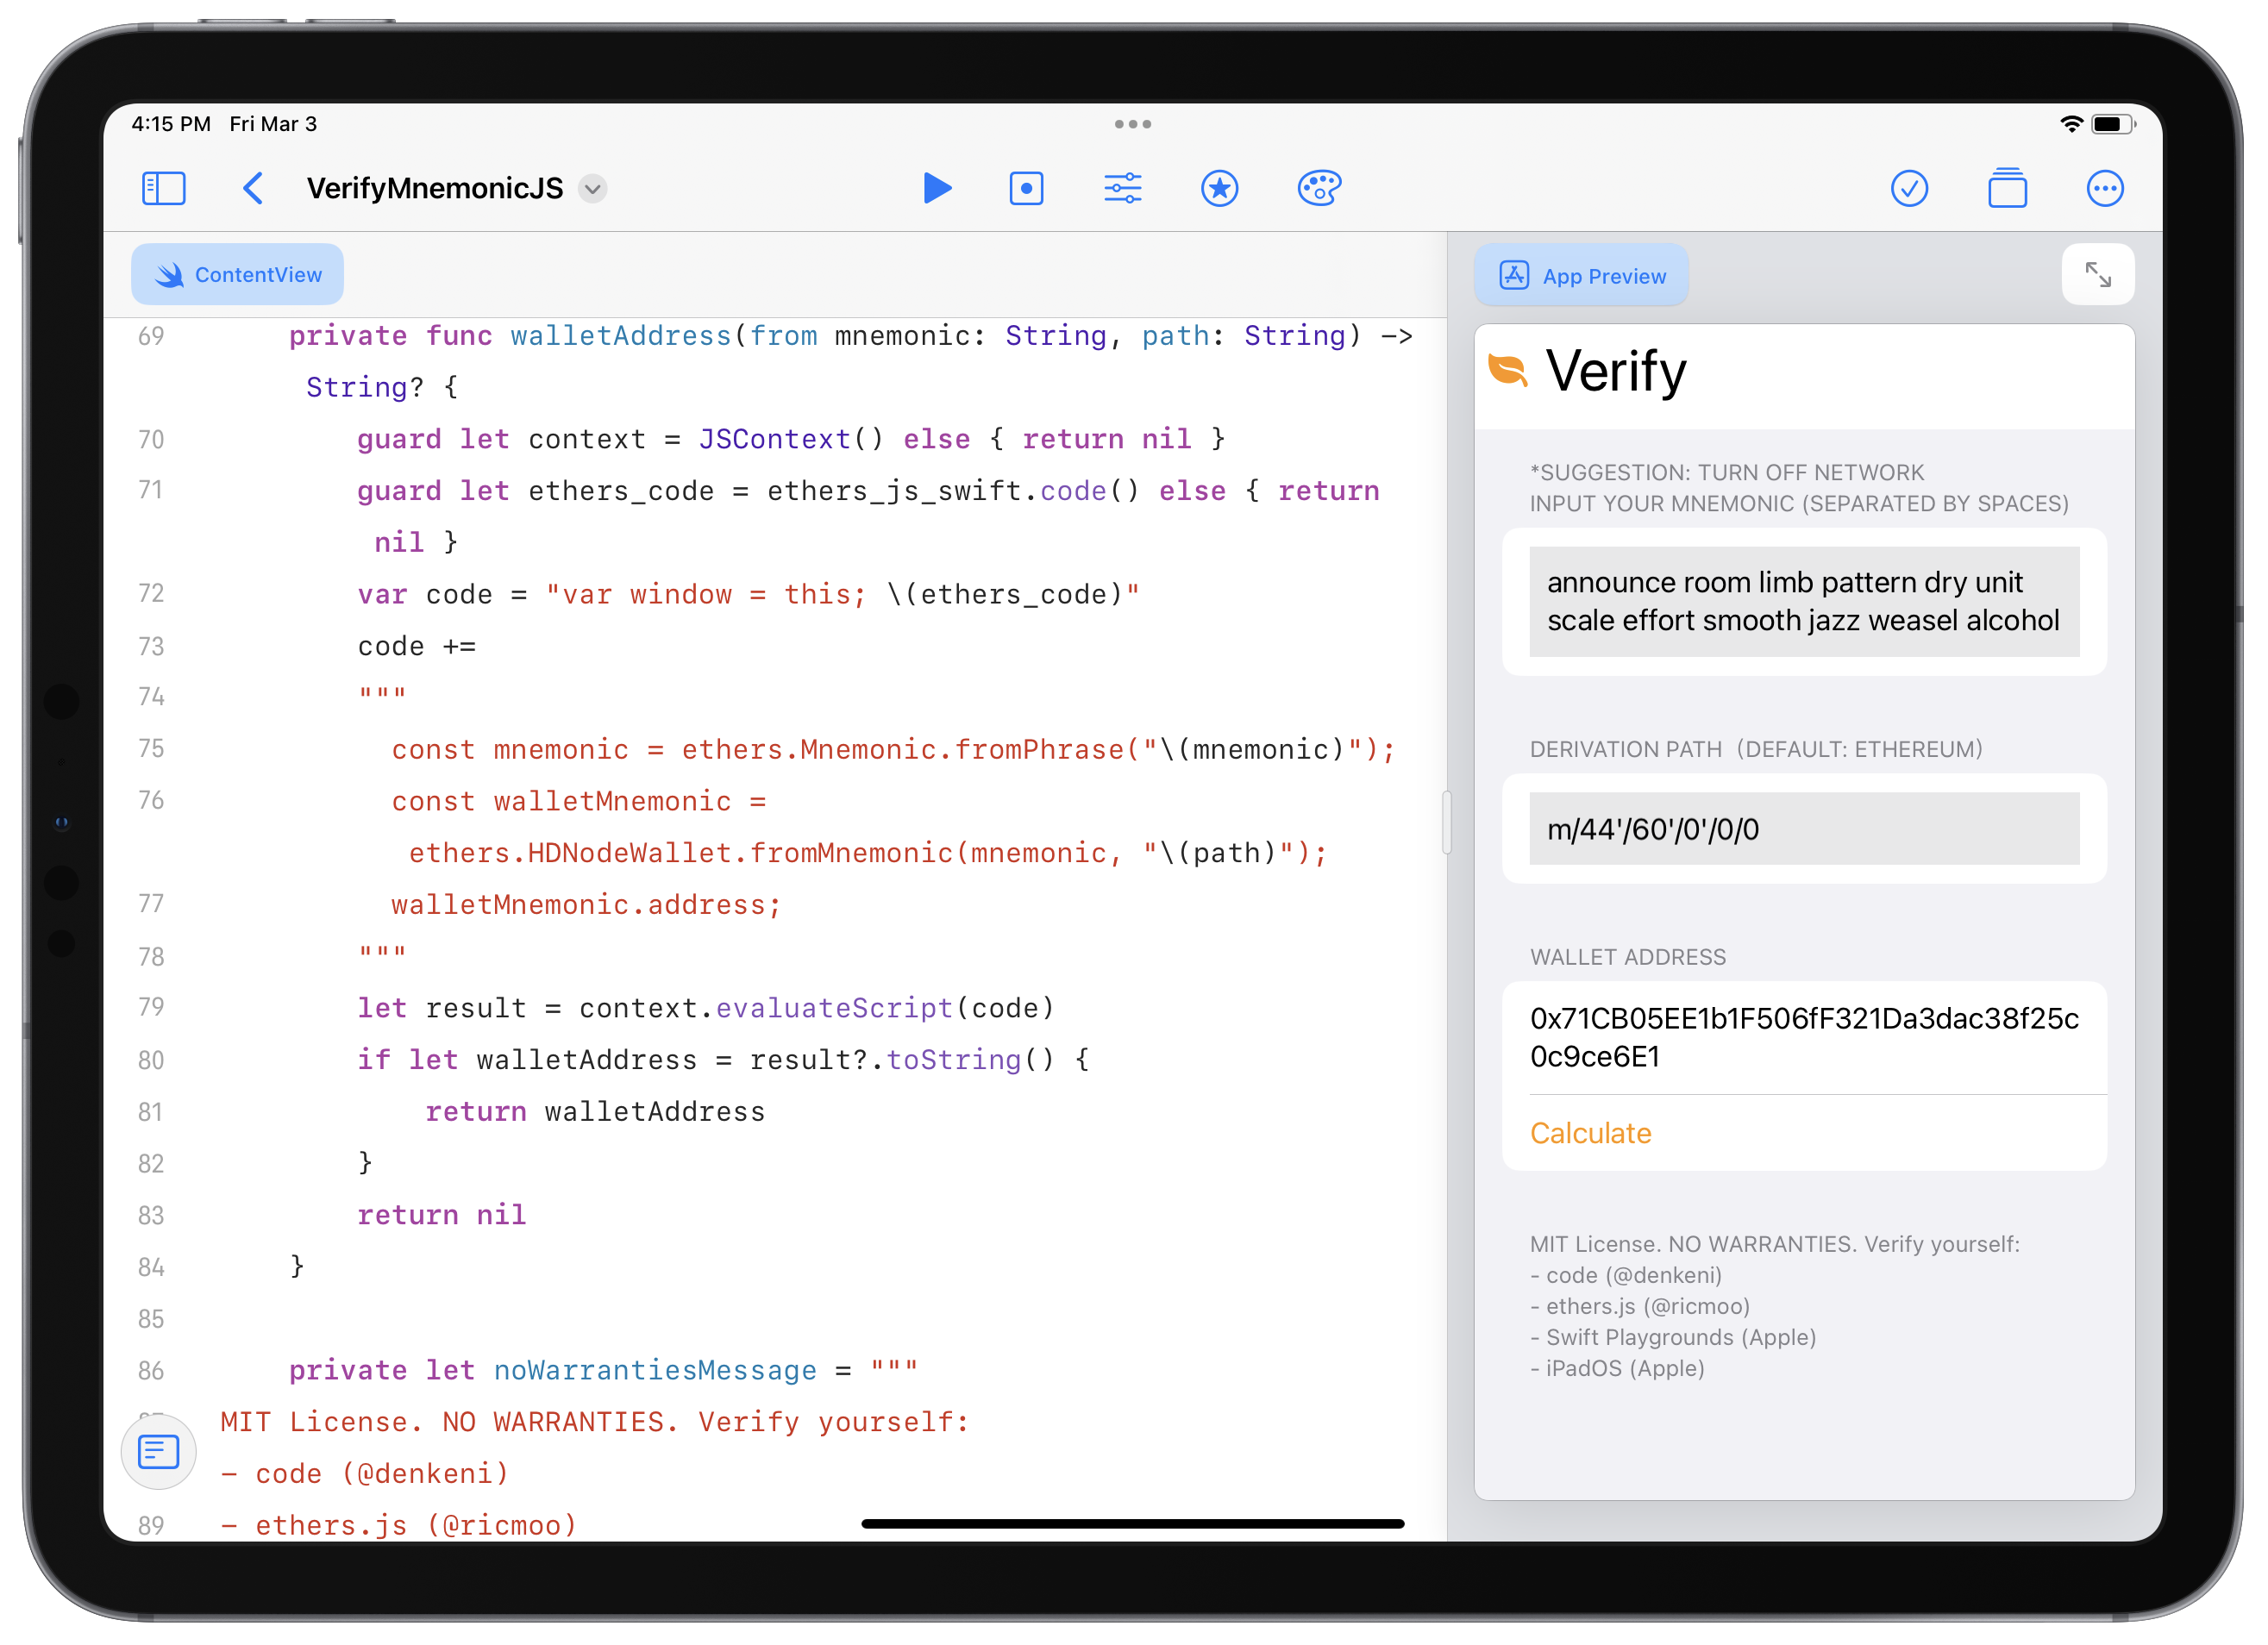 VerifyMnemonicJS running in Swift Playgrounds on the iPad